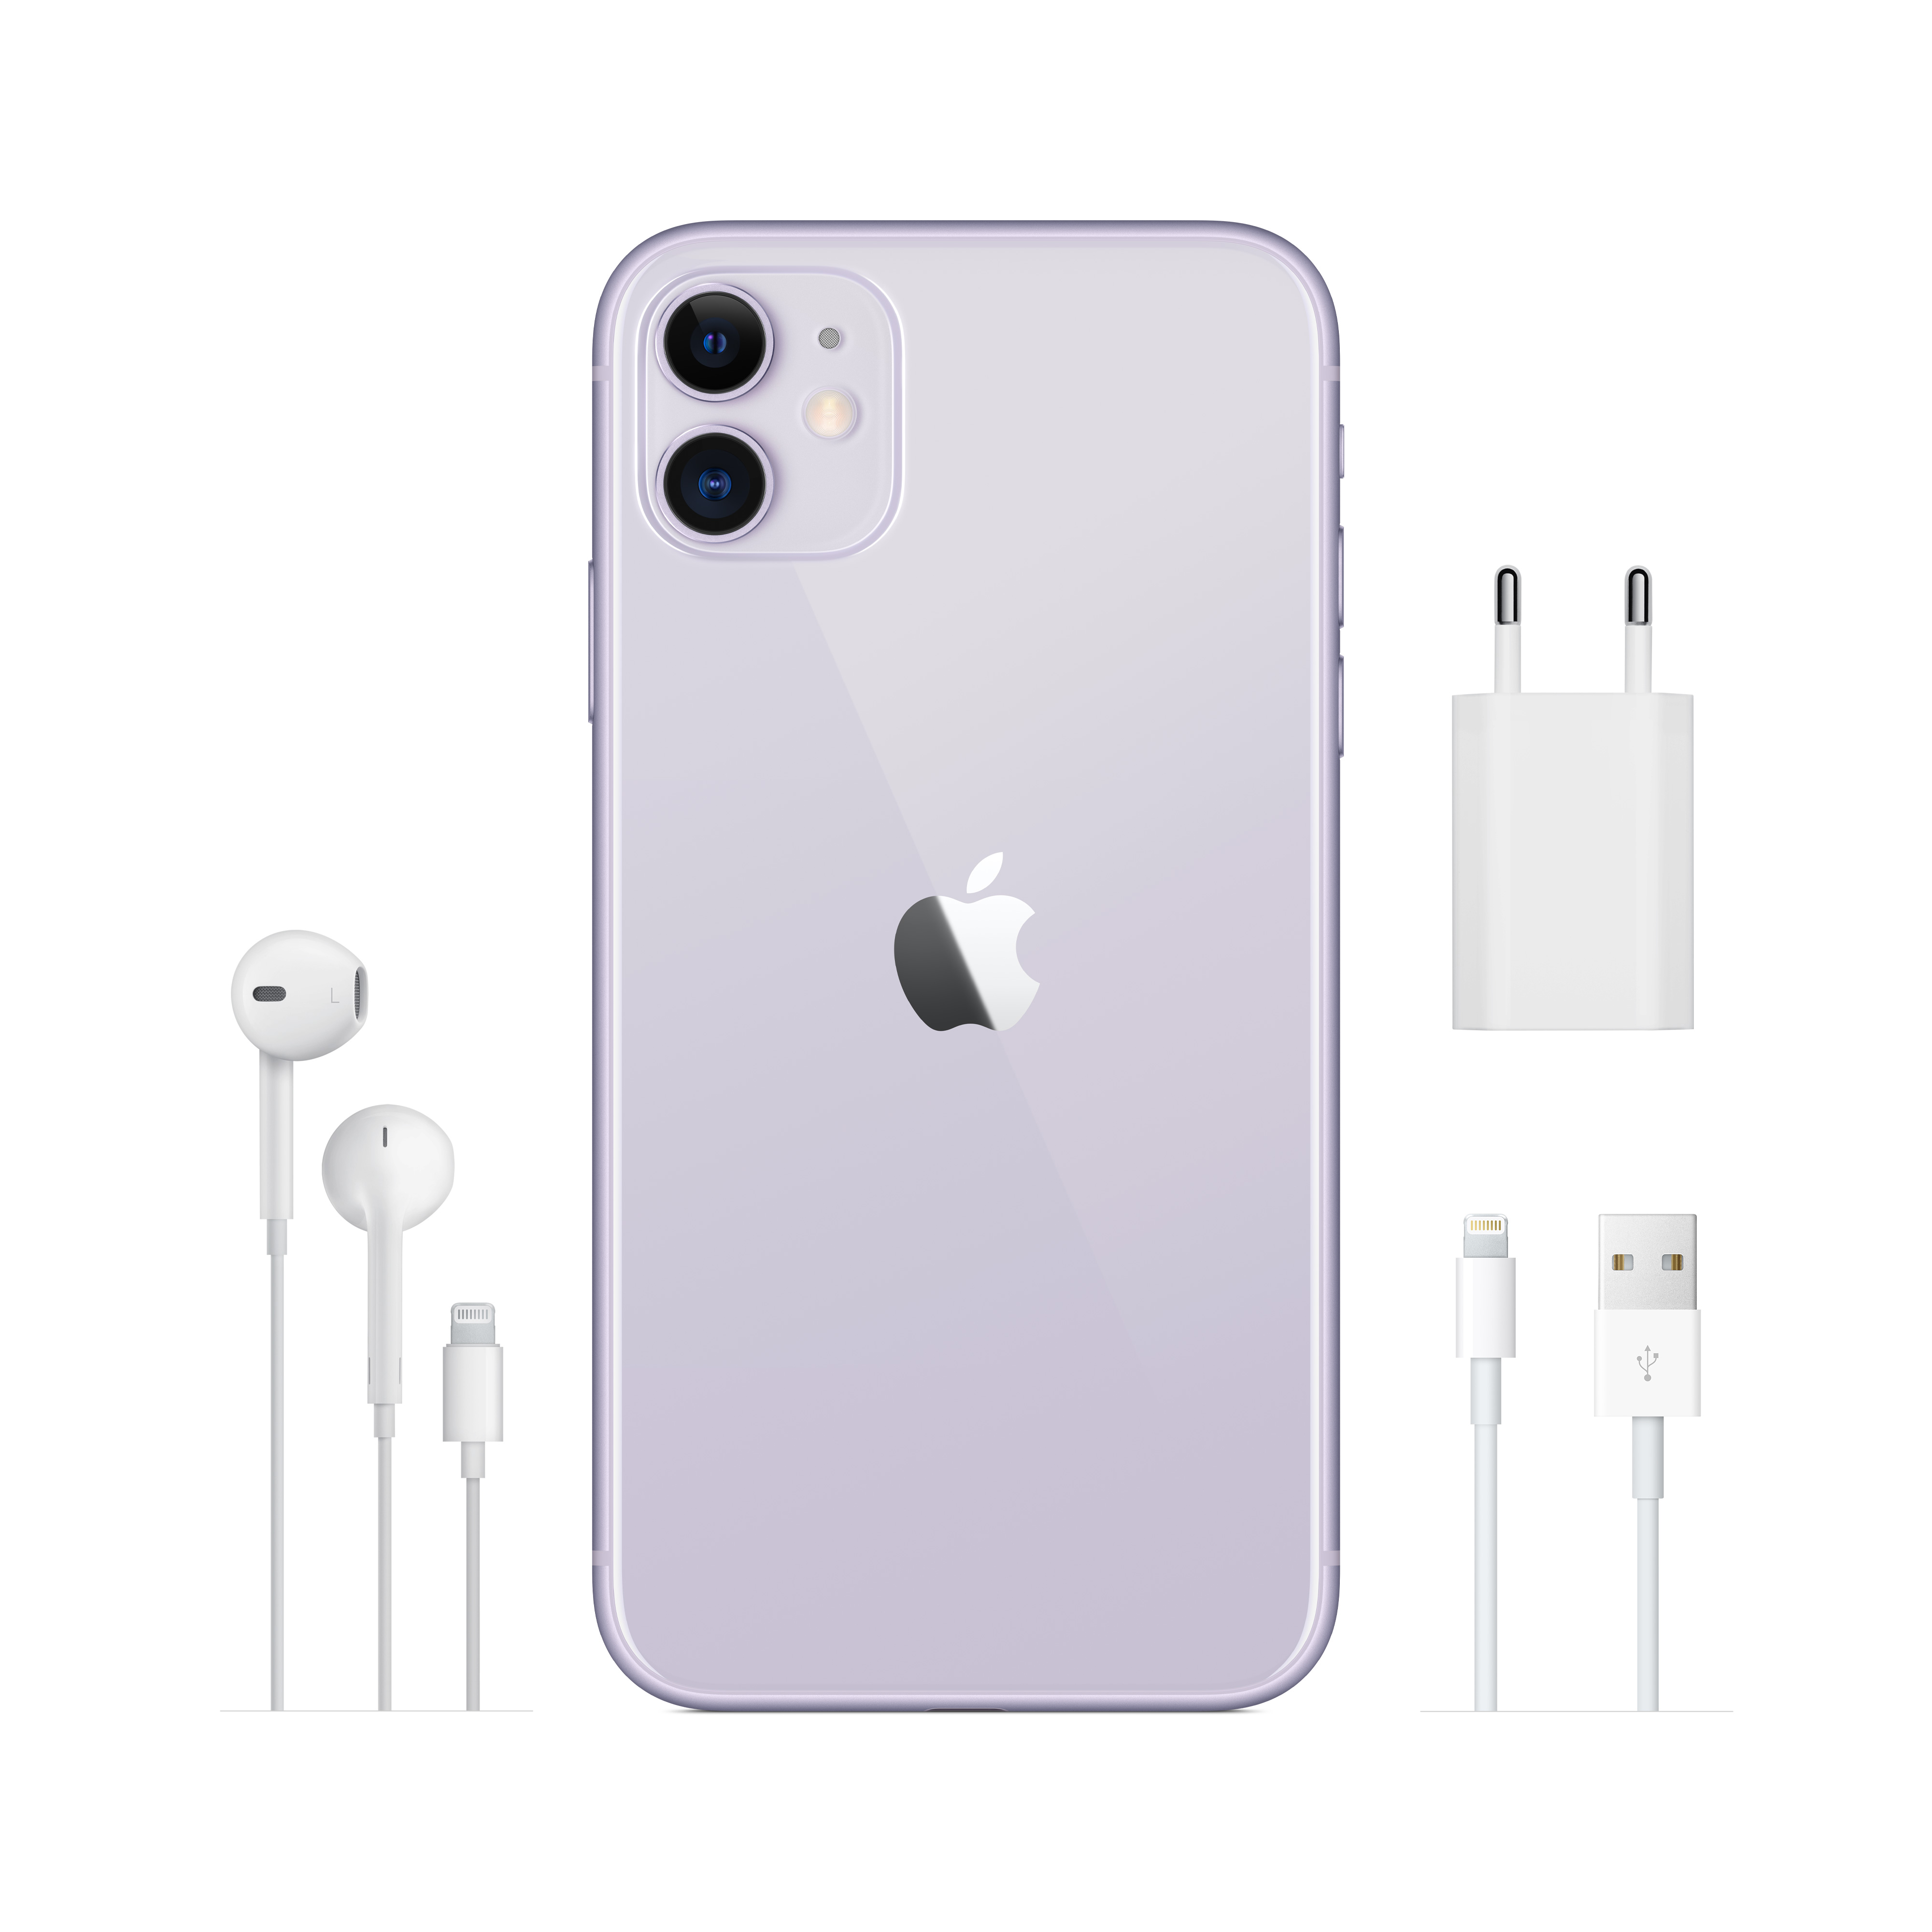 Apple iPhone 11, 128 ГБ, фиолетовый